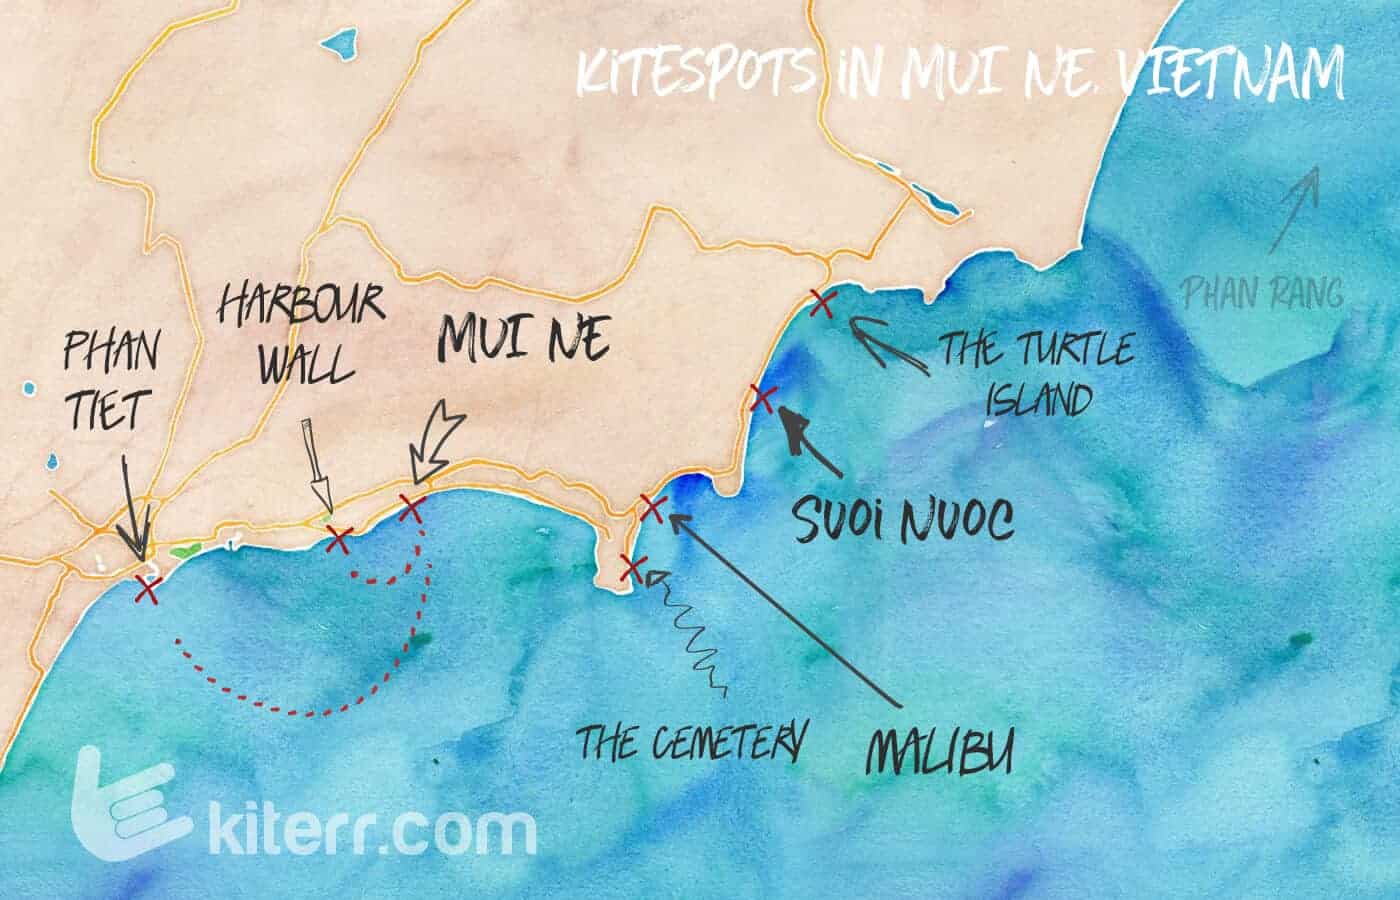 The best kitespots in Mui Ne, Vietnam // Kiterr.com